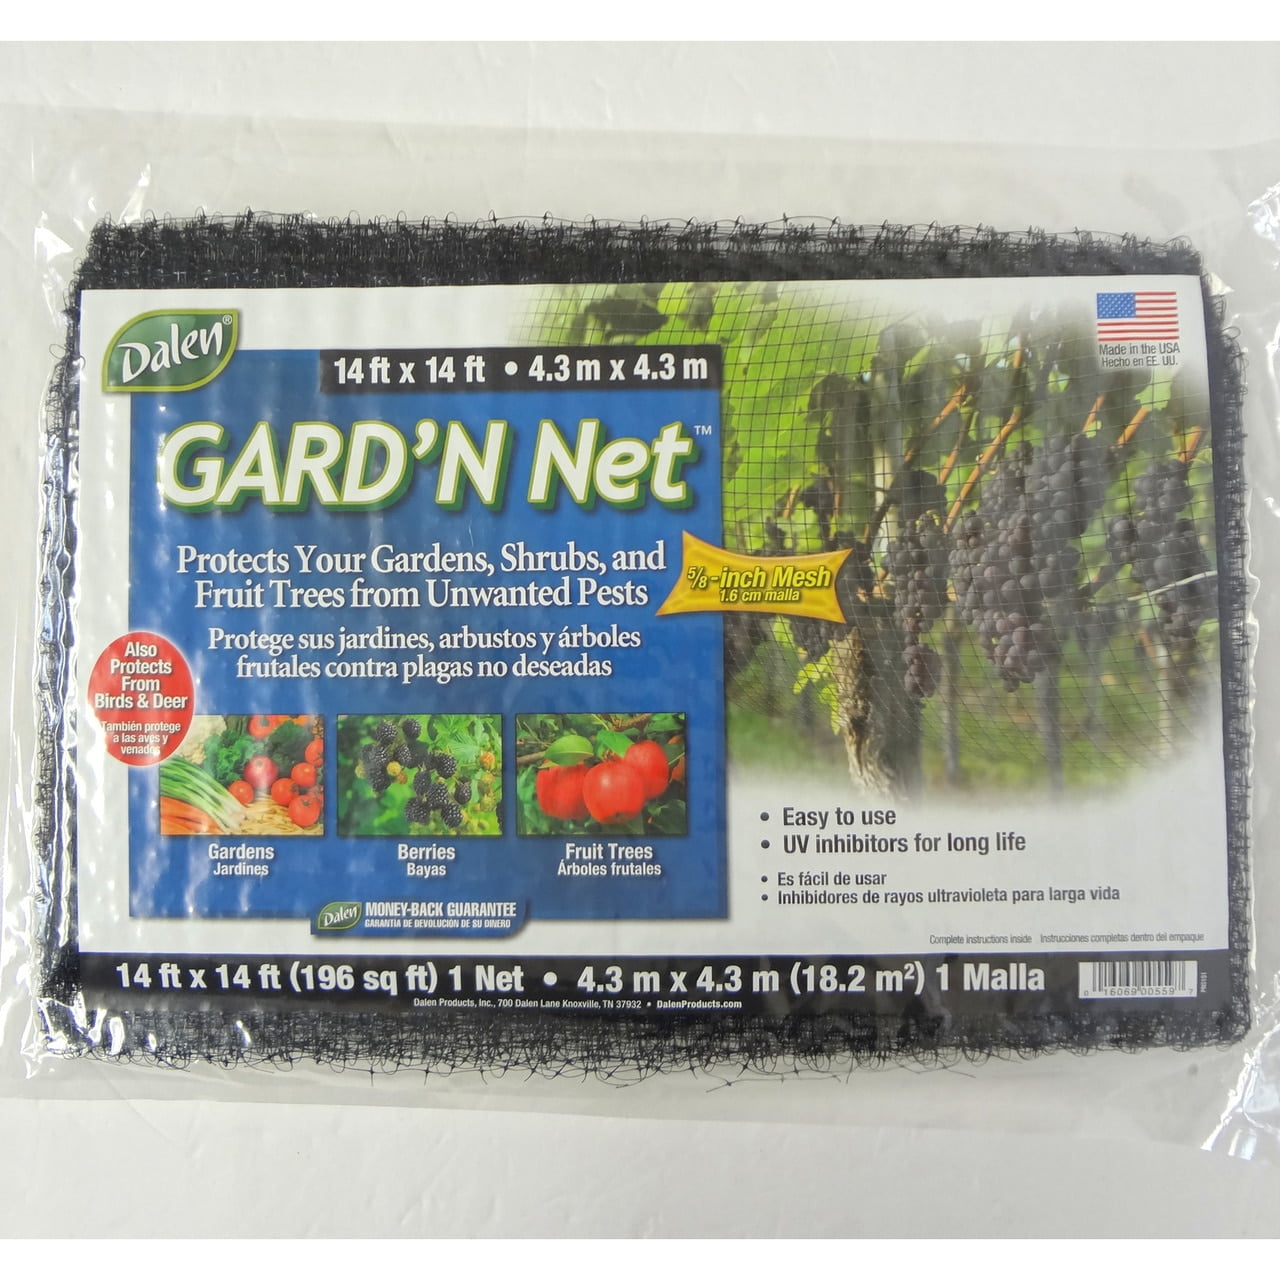 5/8" Mesh For Gardens And Trees New Dalen Gard'n Net Netting 14' X 14' 